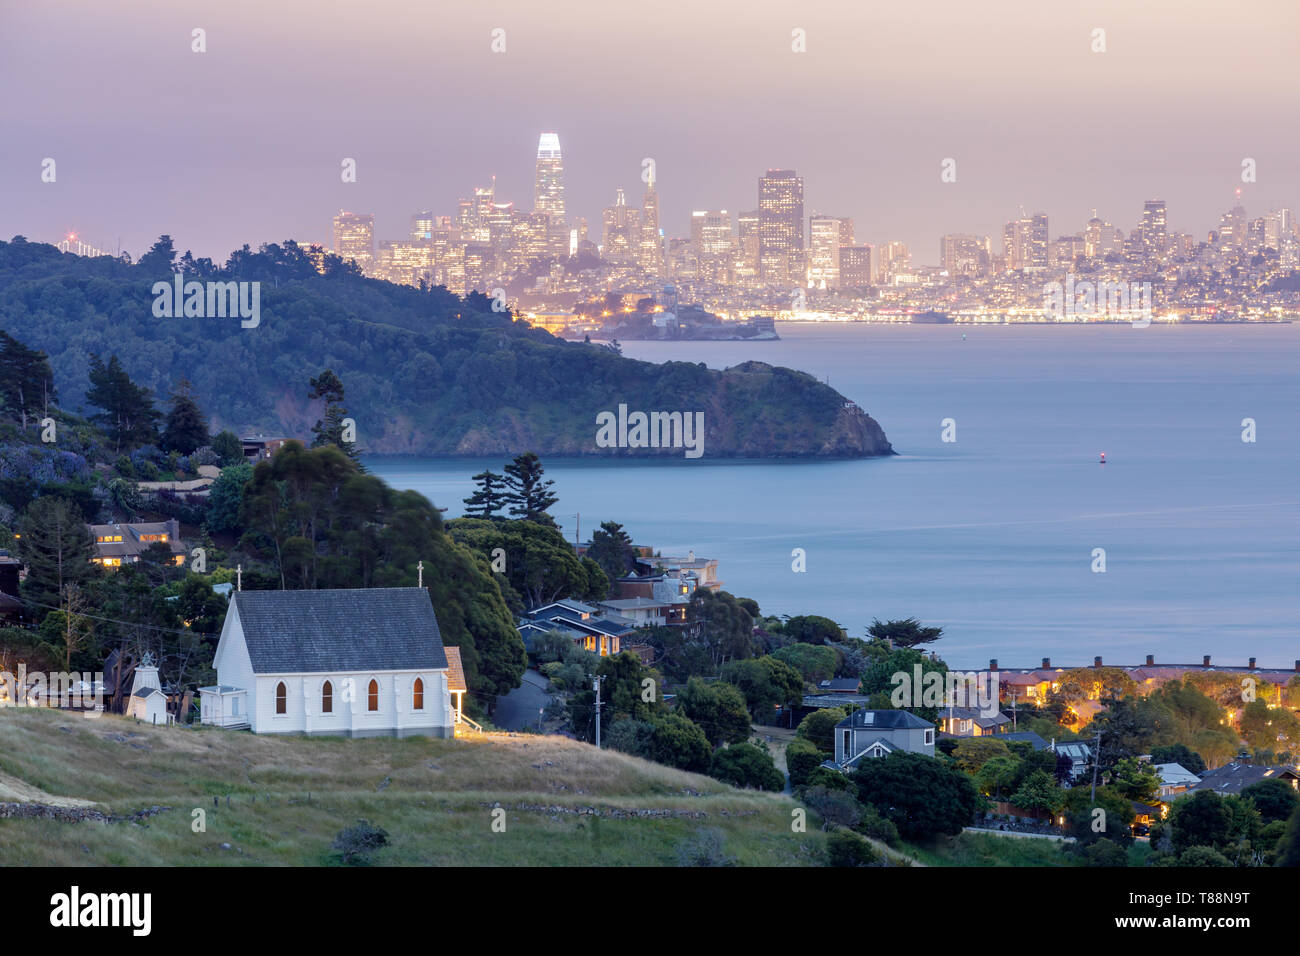 Scenic views of Old St Hillary's Church, Angel Island, Alcatraz Prison, San Francisco Bay and San Francisco Skyline at dusk. Stock Photo